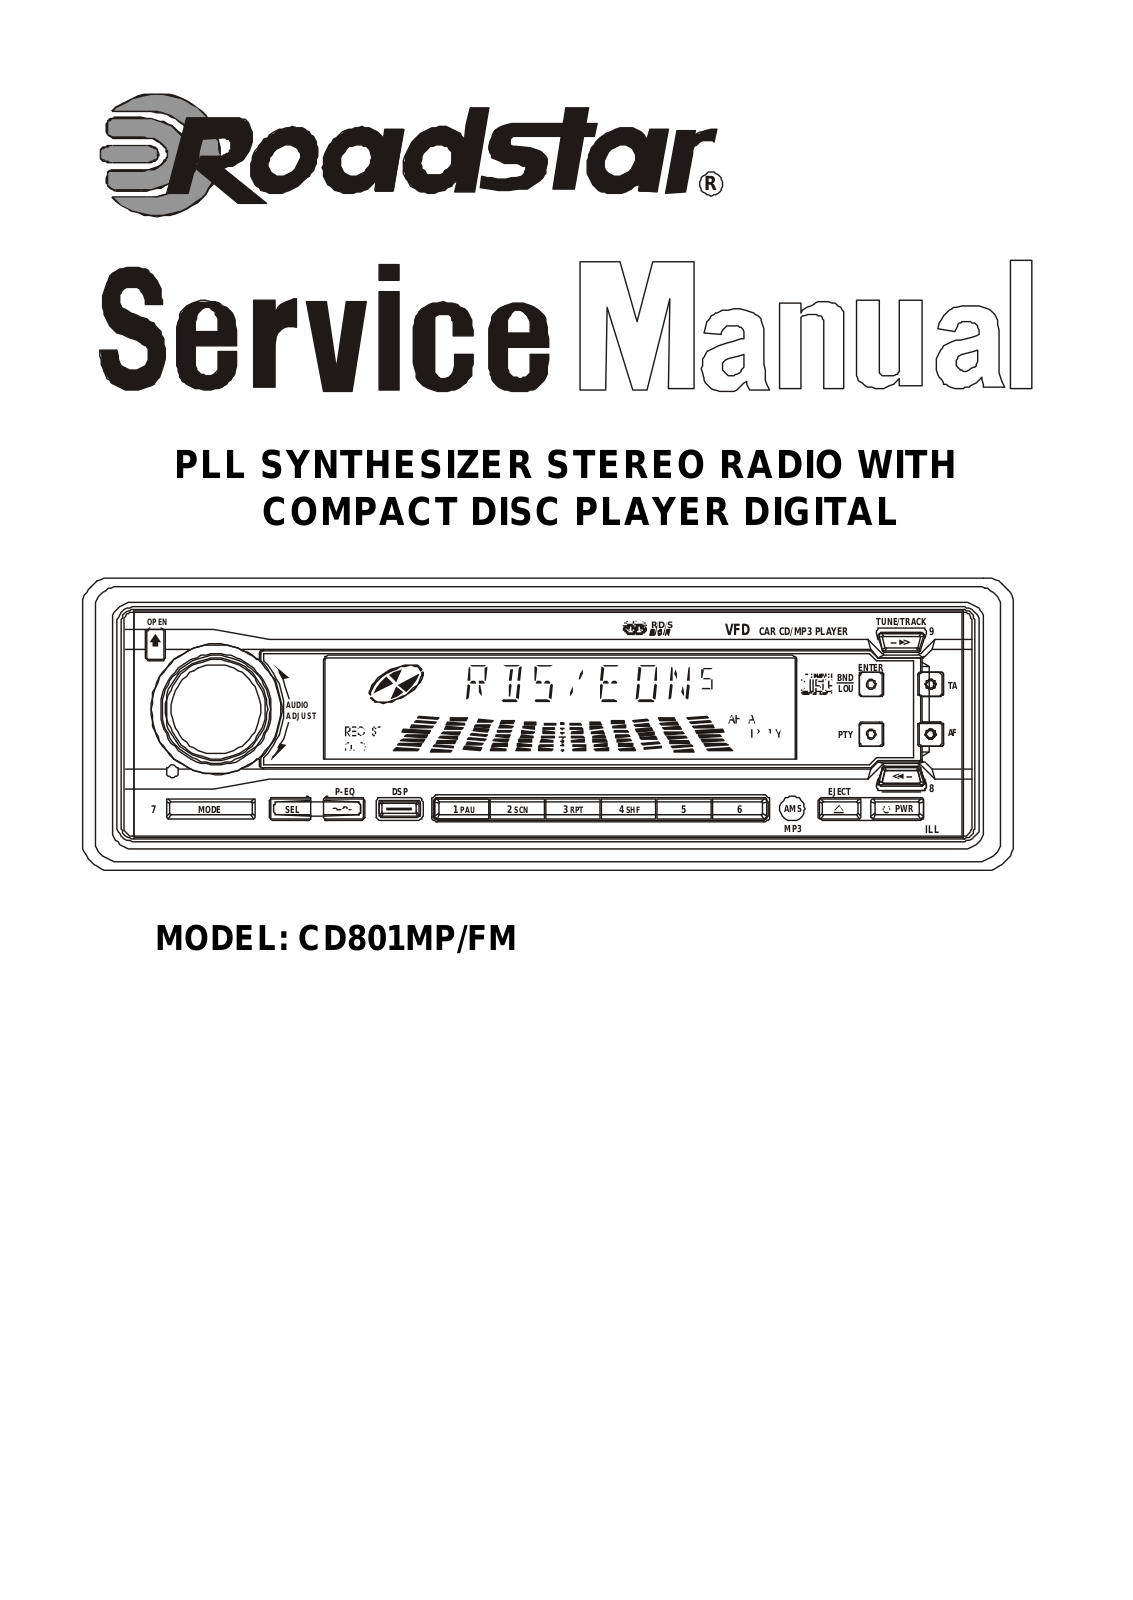 Roadstar CD801MPFM Service Manual